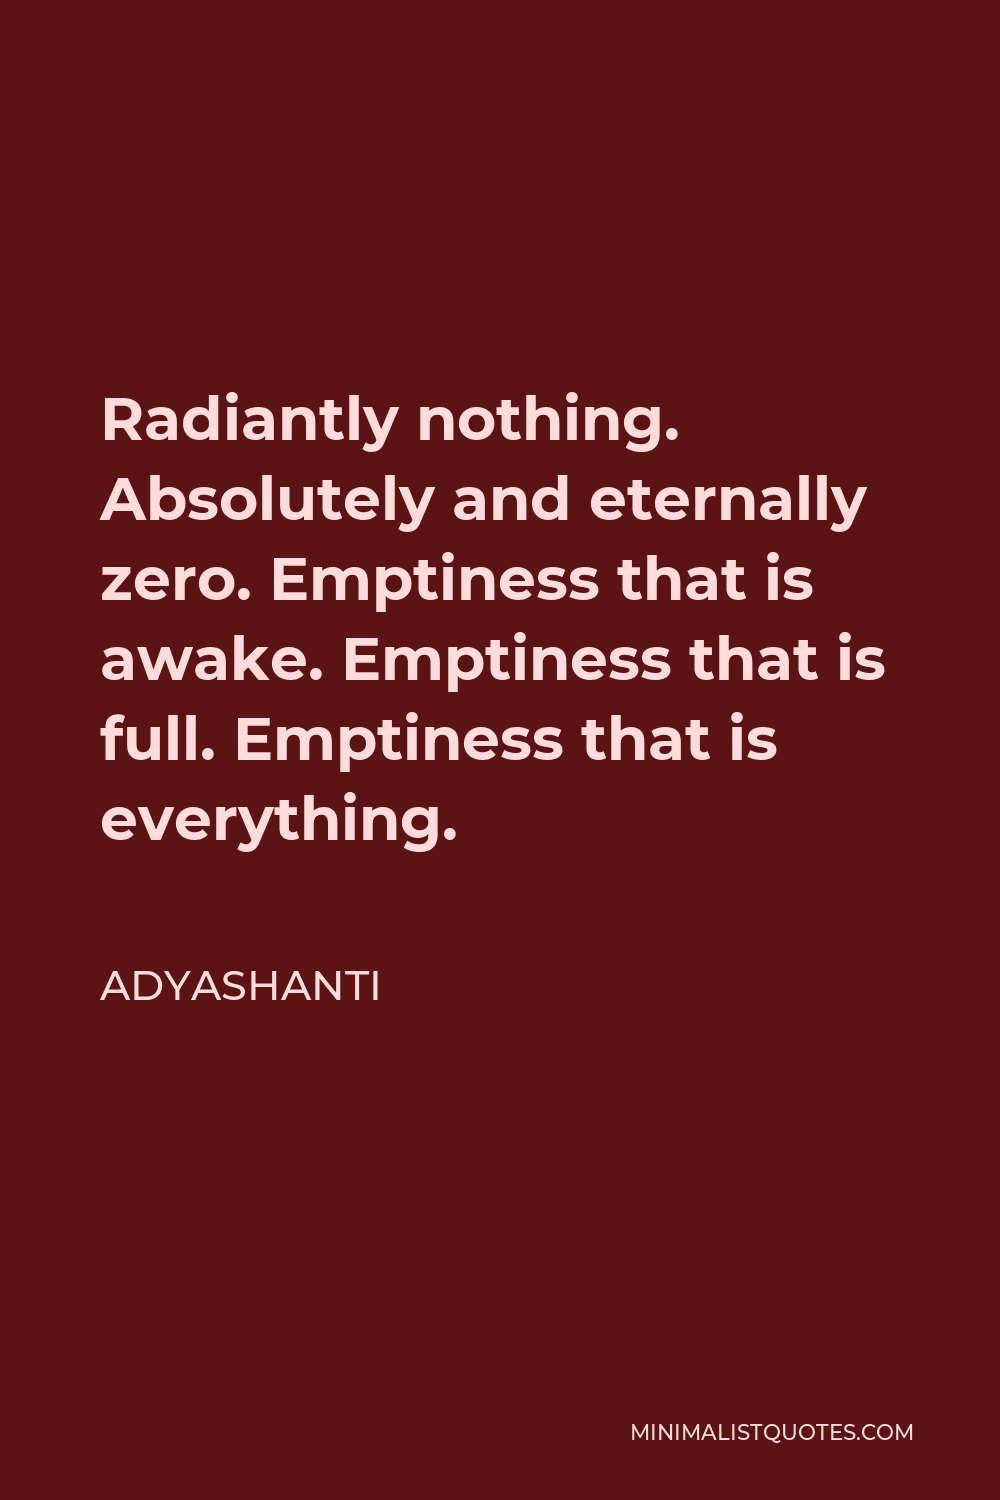 Adyashanti Quote - Radiantly nothing. Absolutely and eternally zero. Emptiness that is awake. Emptiness that is full. Emptiness that is everything.